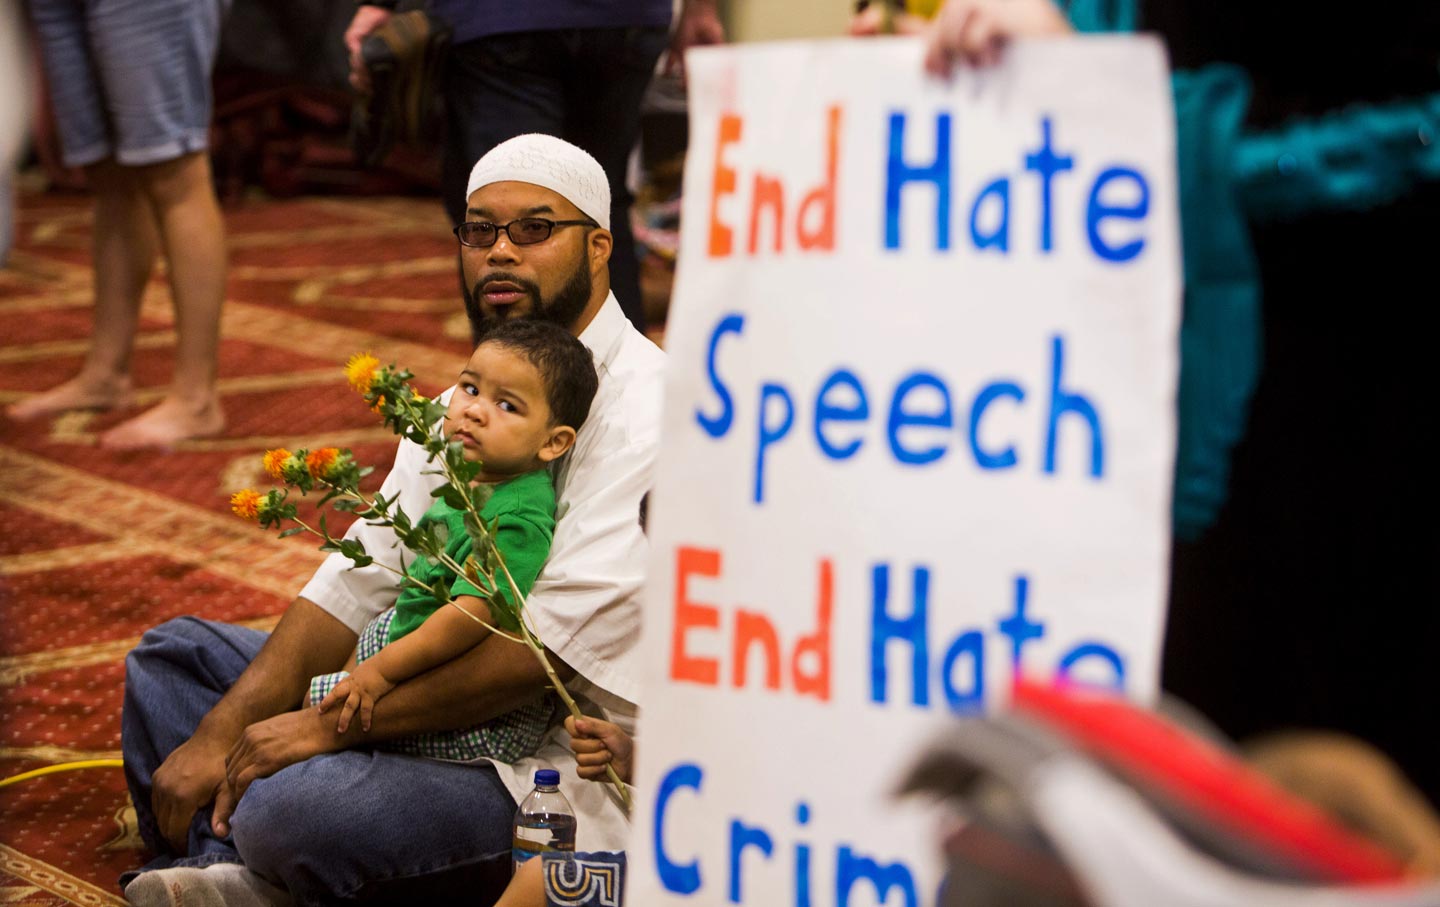 muslim_hate_speech_rtr_img